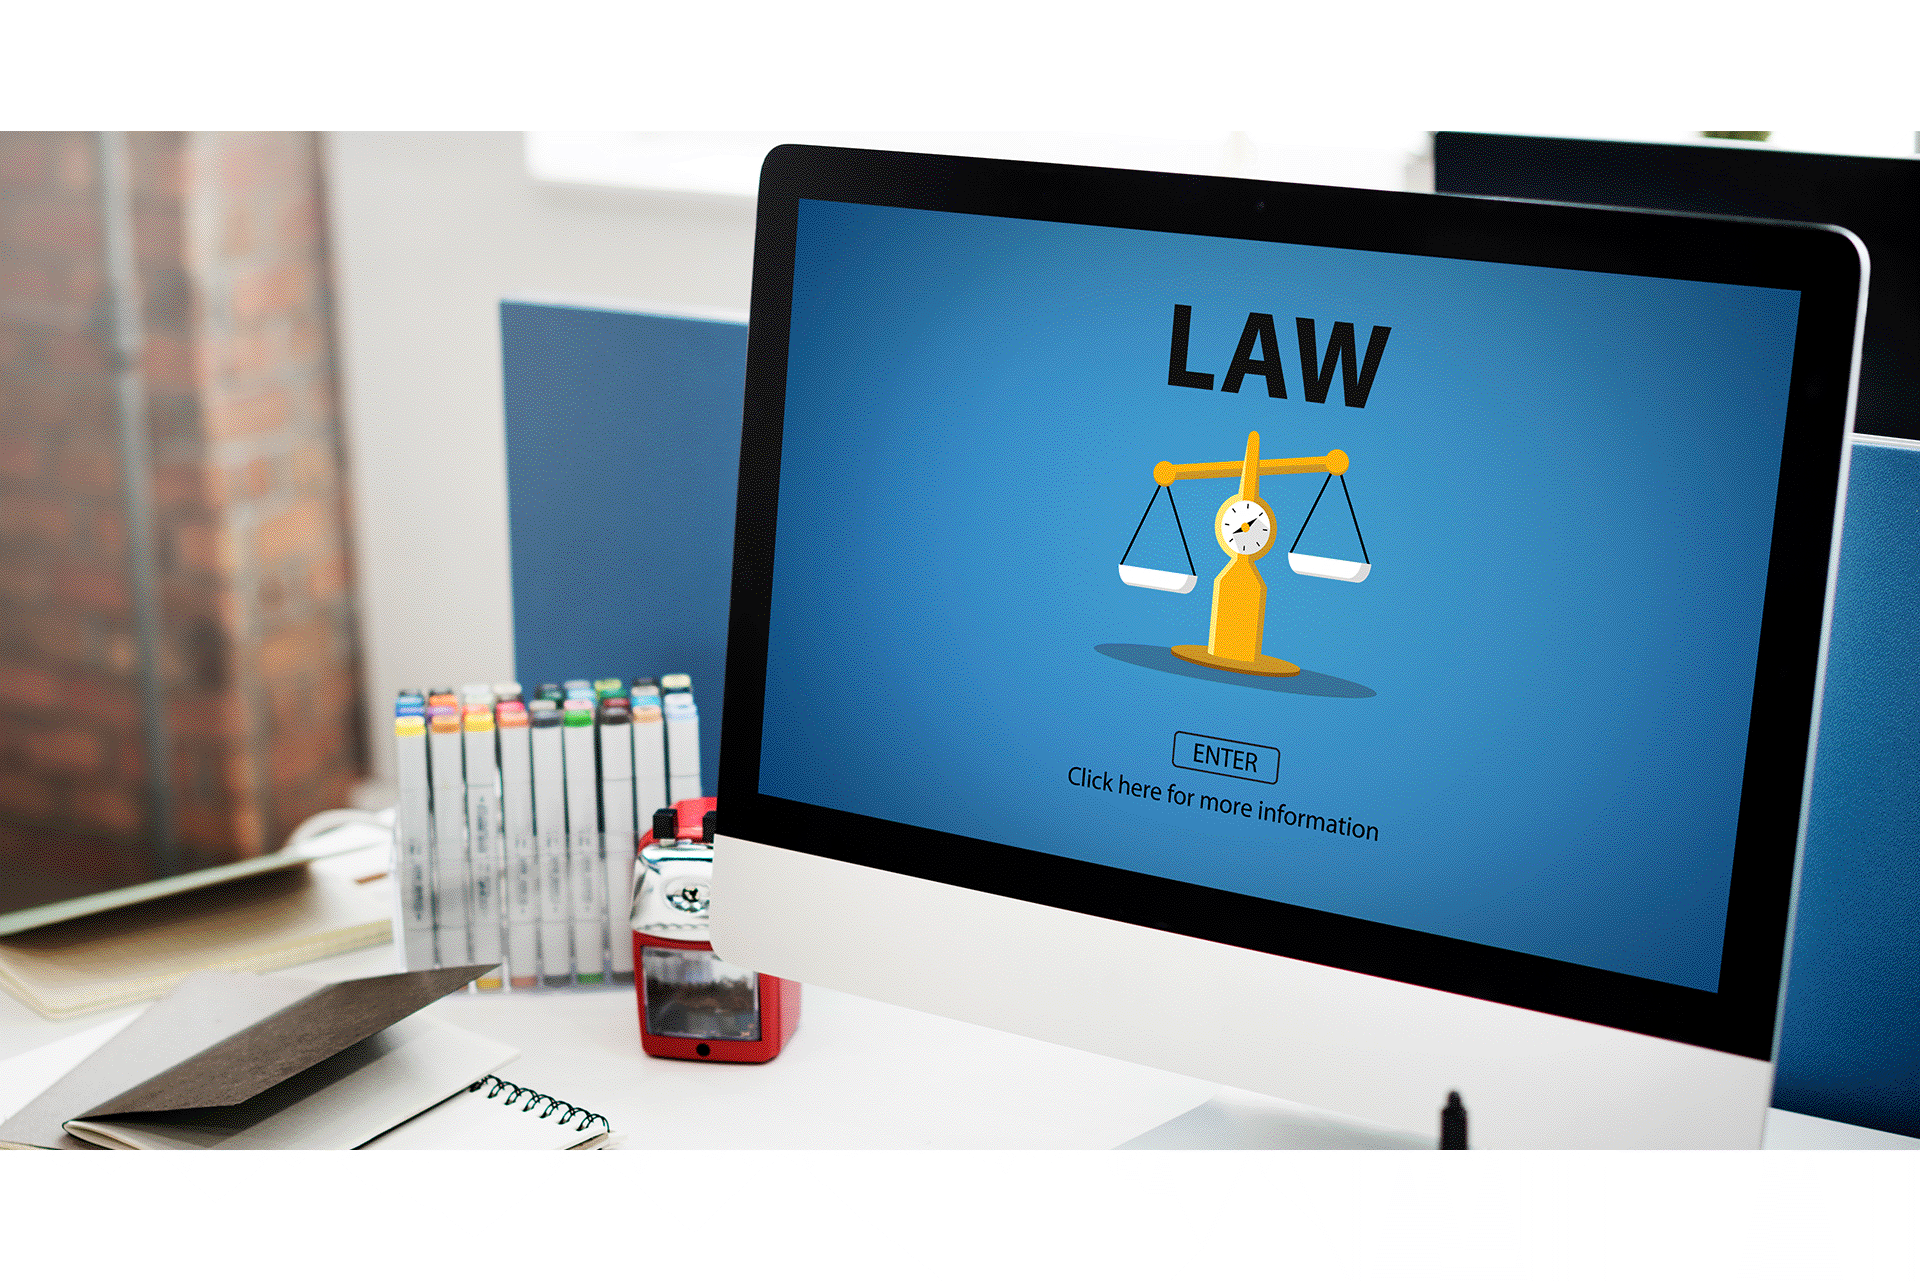 How a Leading American Legal Publisher Enhanced its Legislative Content